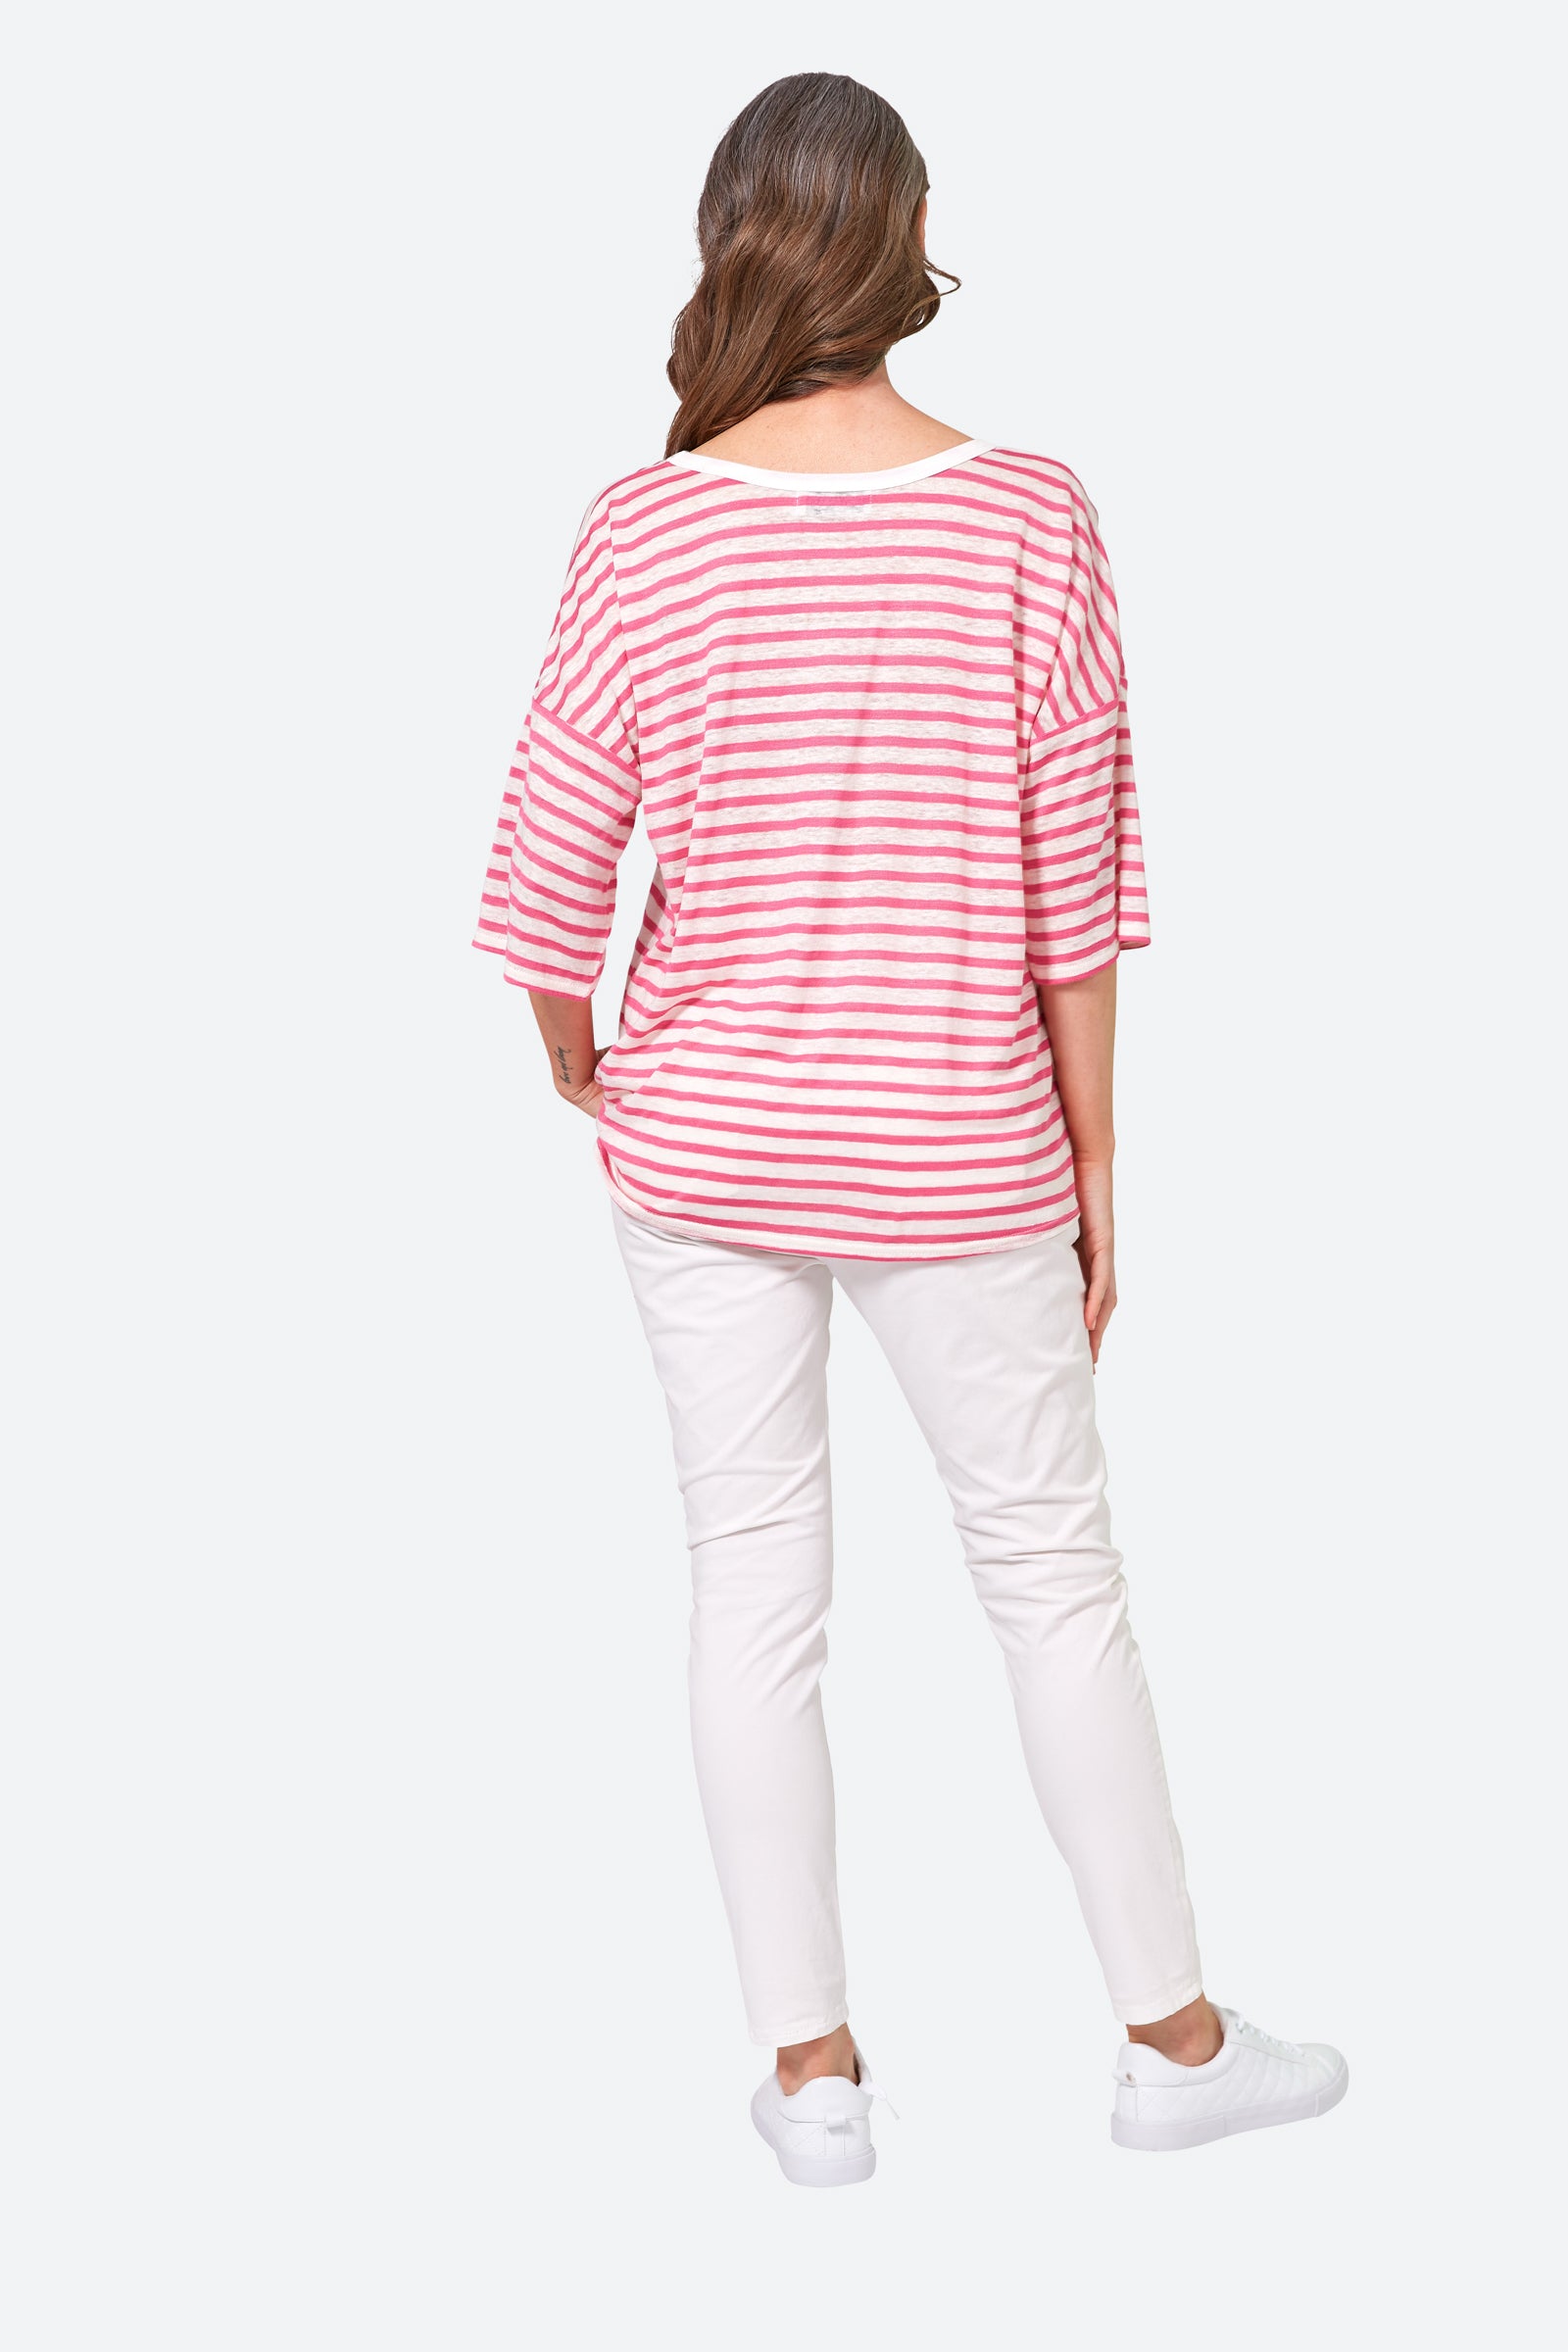 Intrepid Stripe Tshirt - Candy - eb&ive Clothing - Top Tshirt 3/4 Sleeve Linen